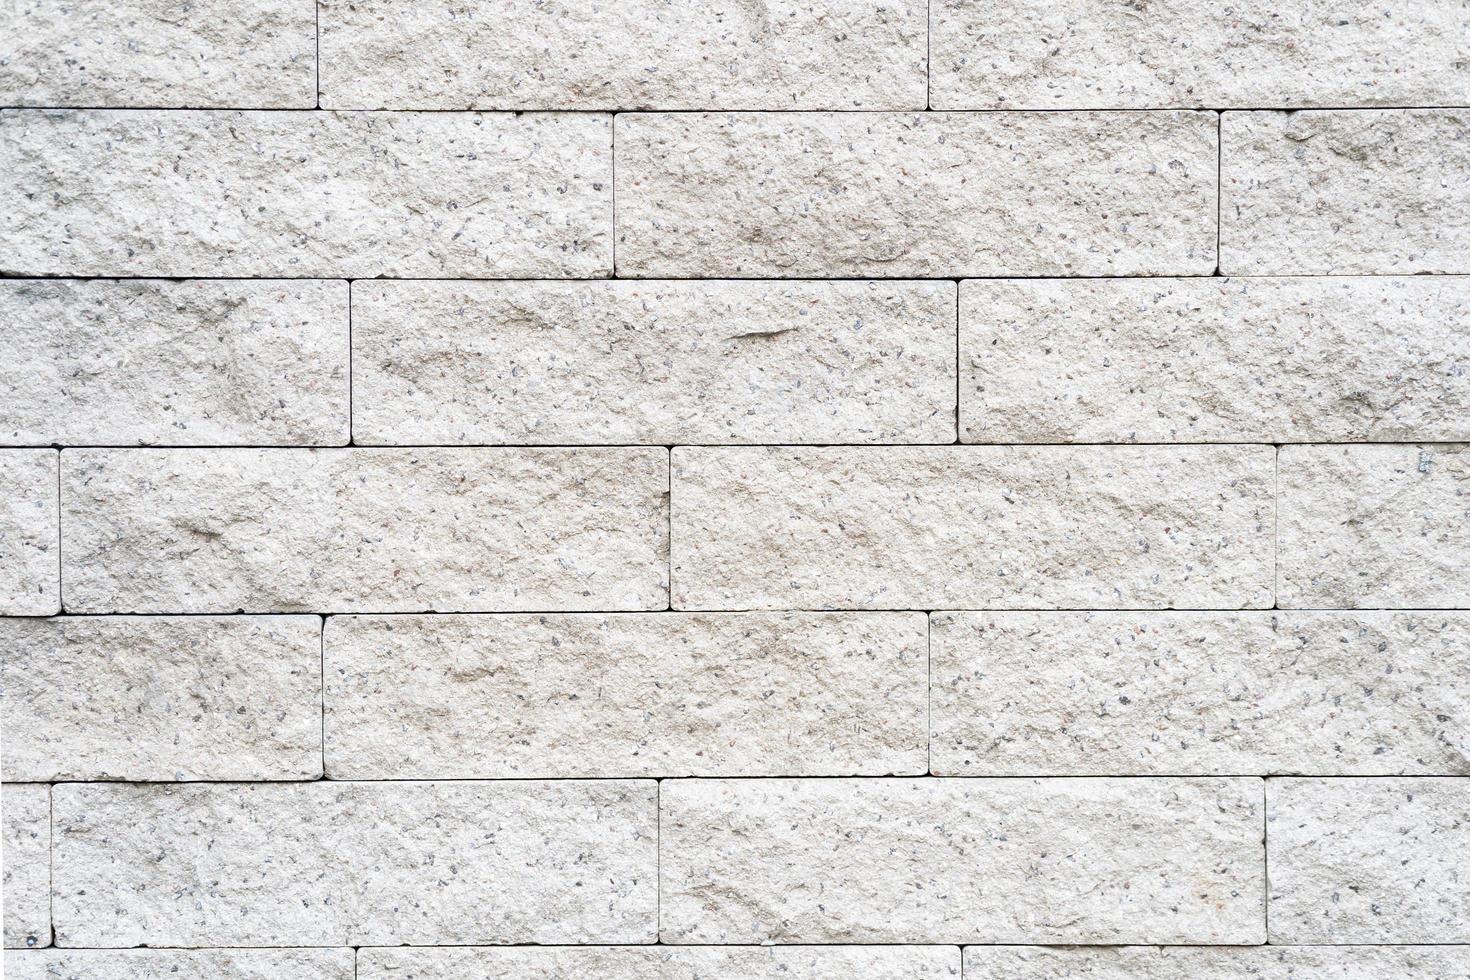 Cream and white brick wall texture background. Brickwork or stonework flooring interior rock old pattern clean concrete grid uneven bricks design stack. photo